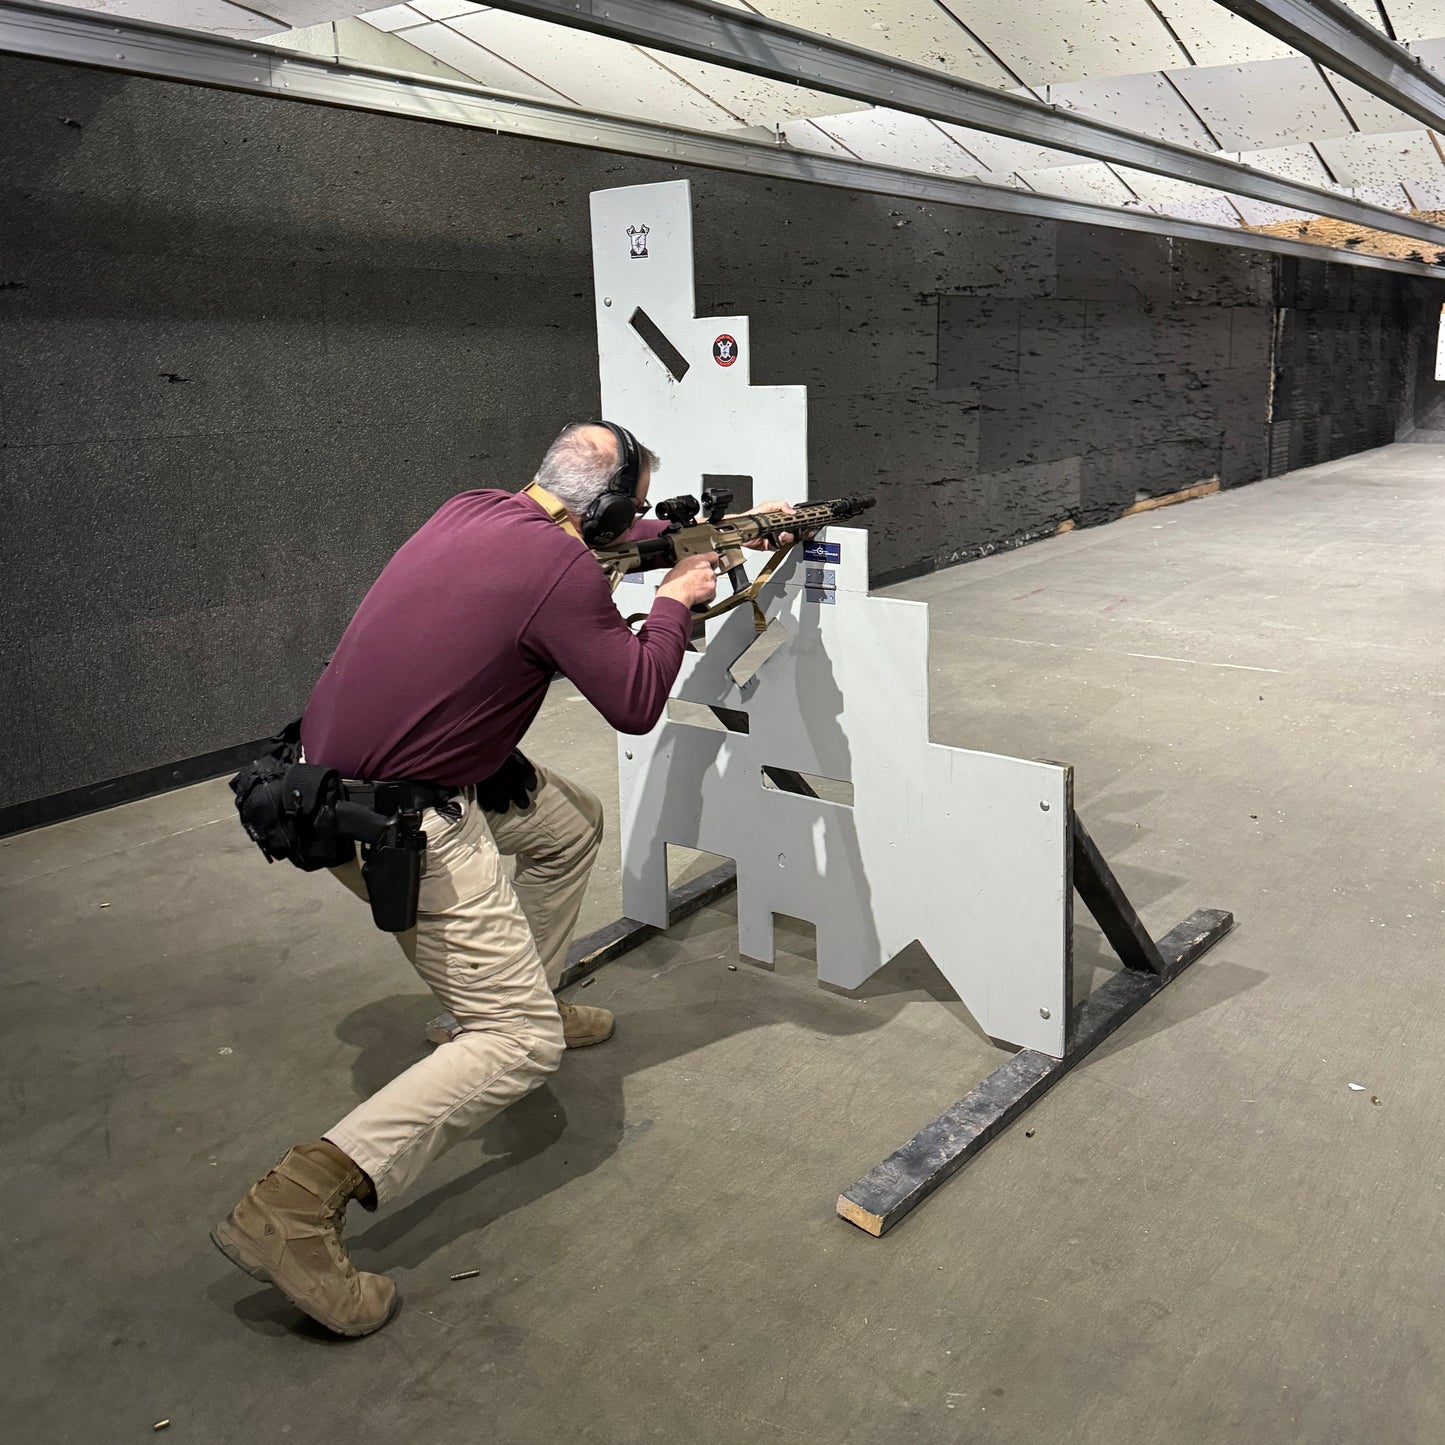 Skills: Shooting Around Barricades